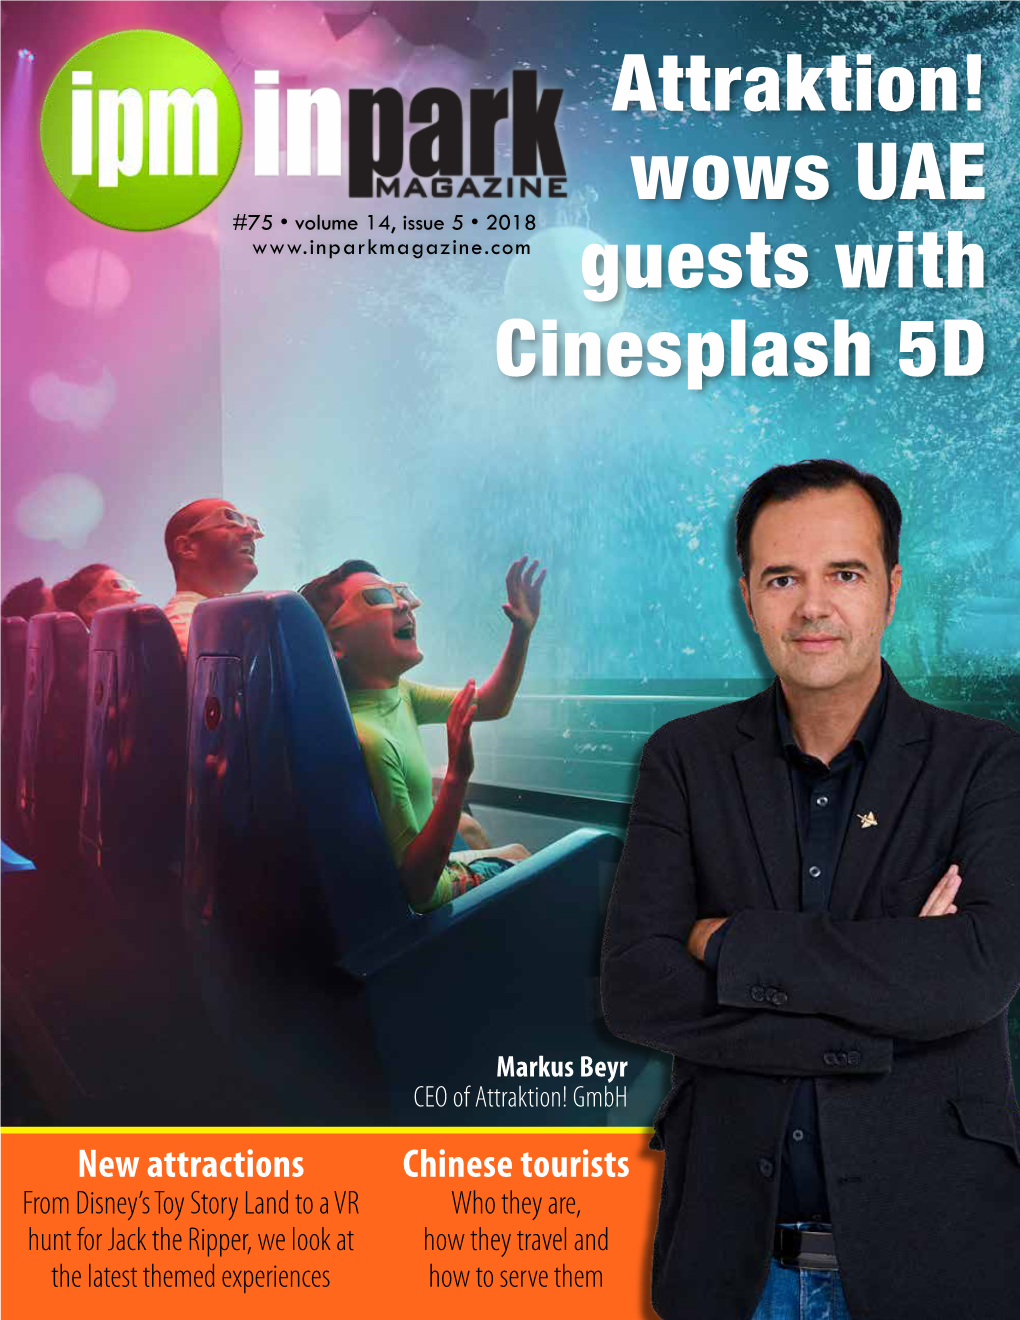 Attraktion! Wows UAE Guests with Cinesplash 5D